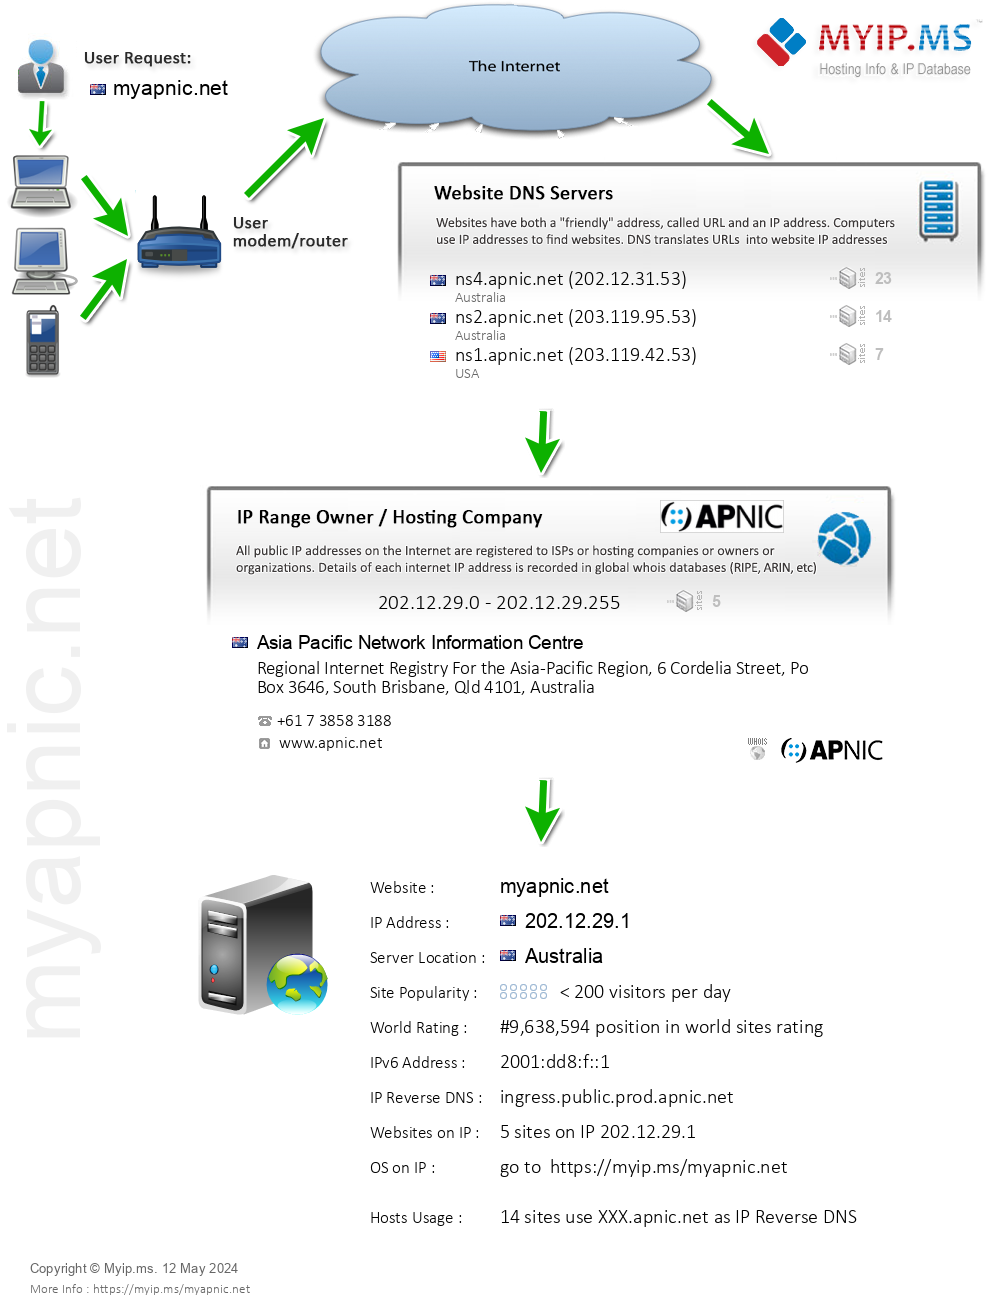 Myapnic.net - Website Hosting Visual IP Diagram